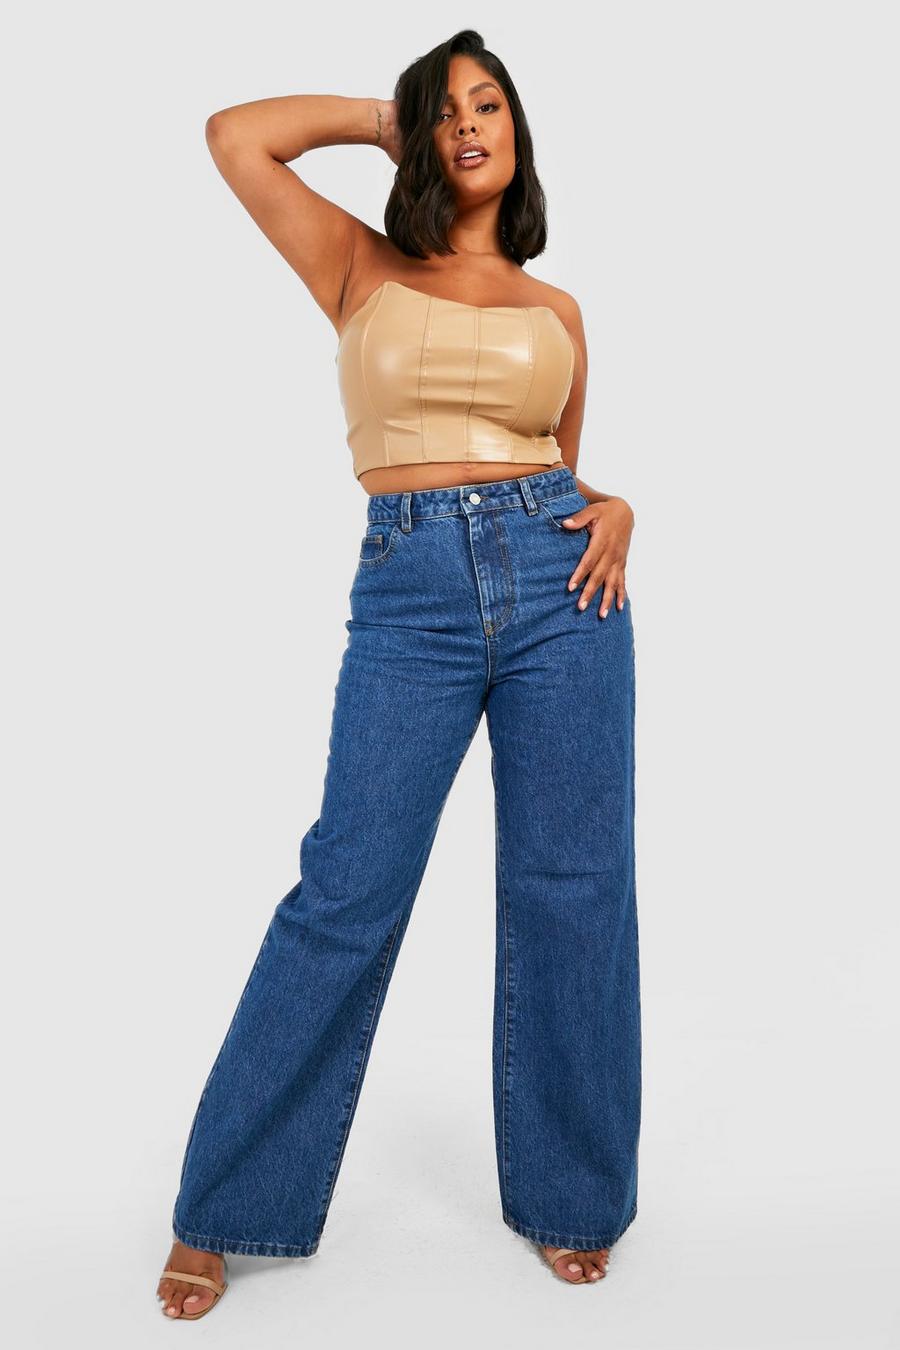 Women's Sale Jeans, Cheap Jeans